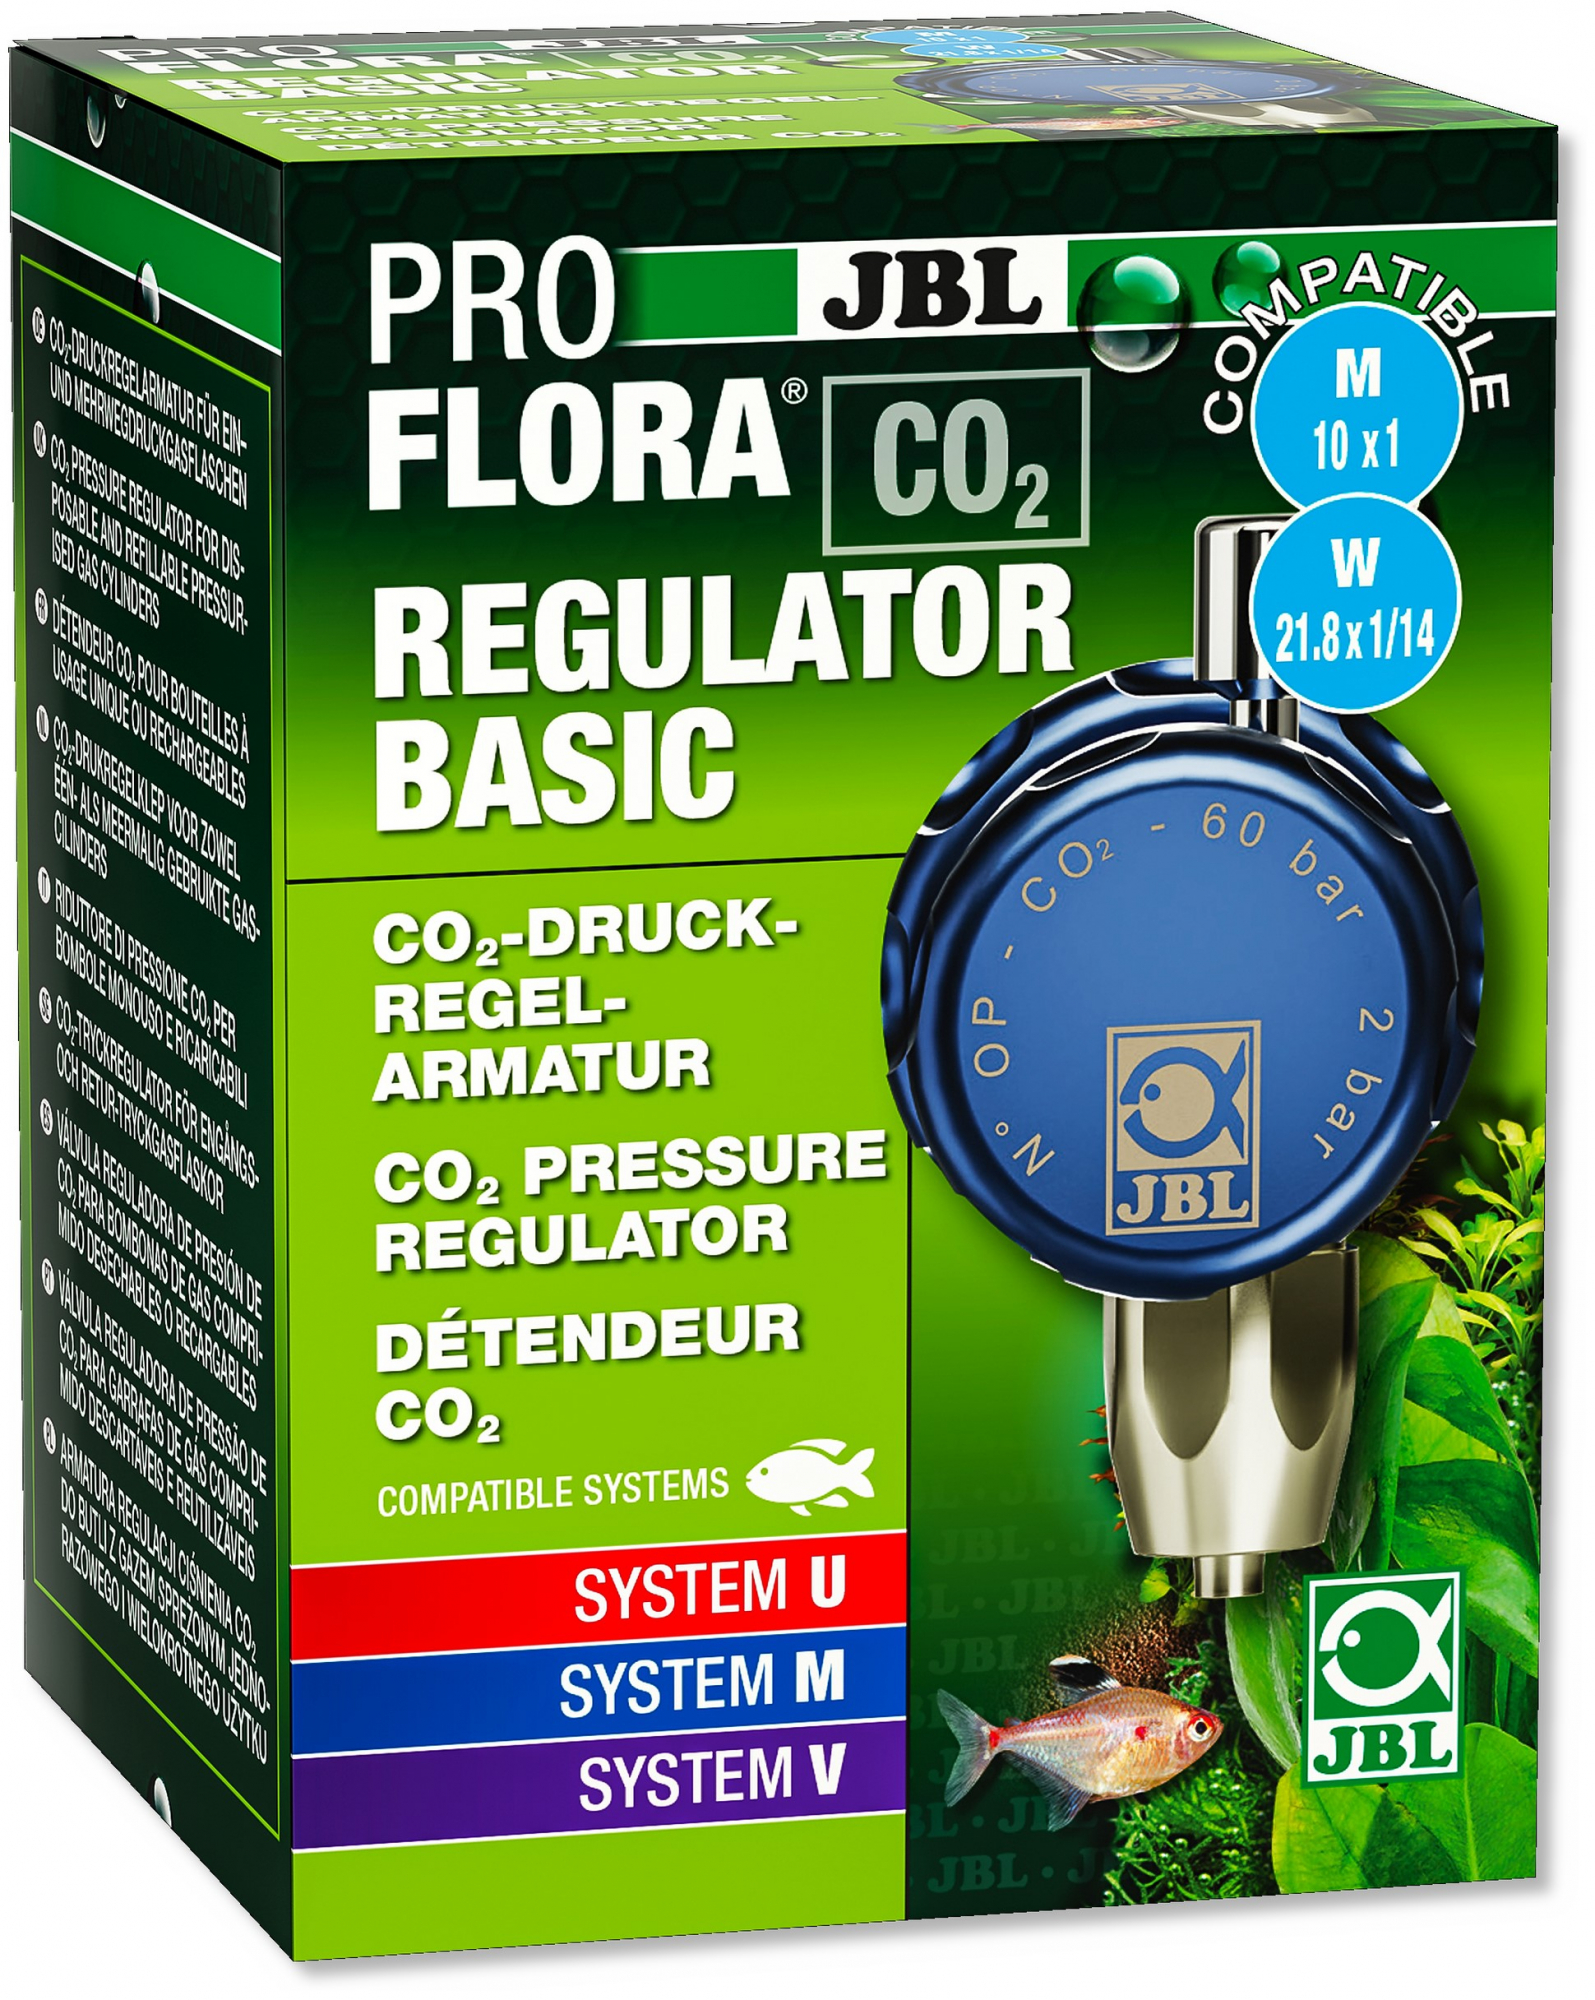 JBL Proflora Regulator Basic Manorreductor para sistemas fertilizantes de CO2